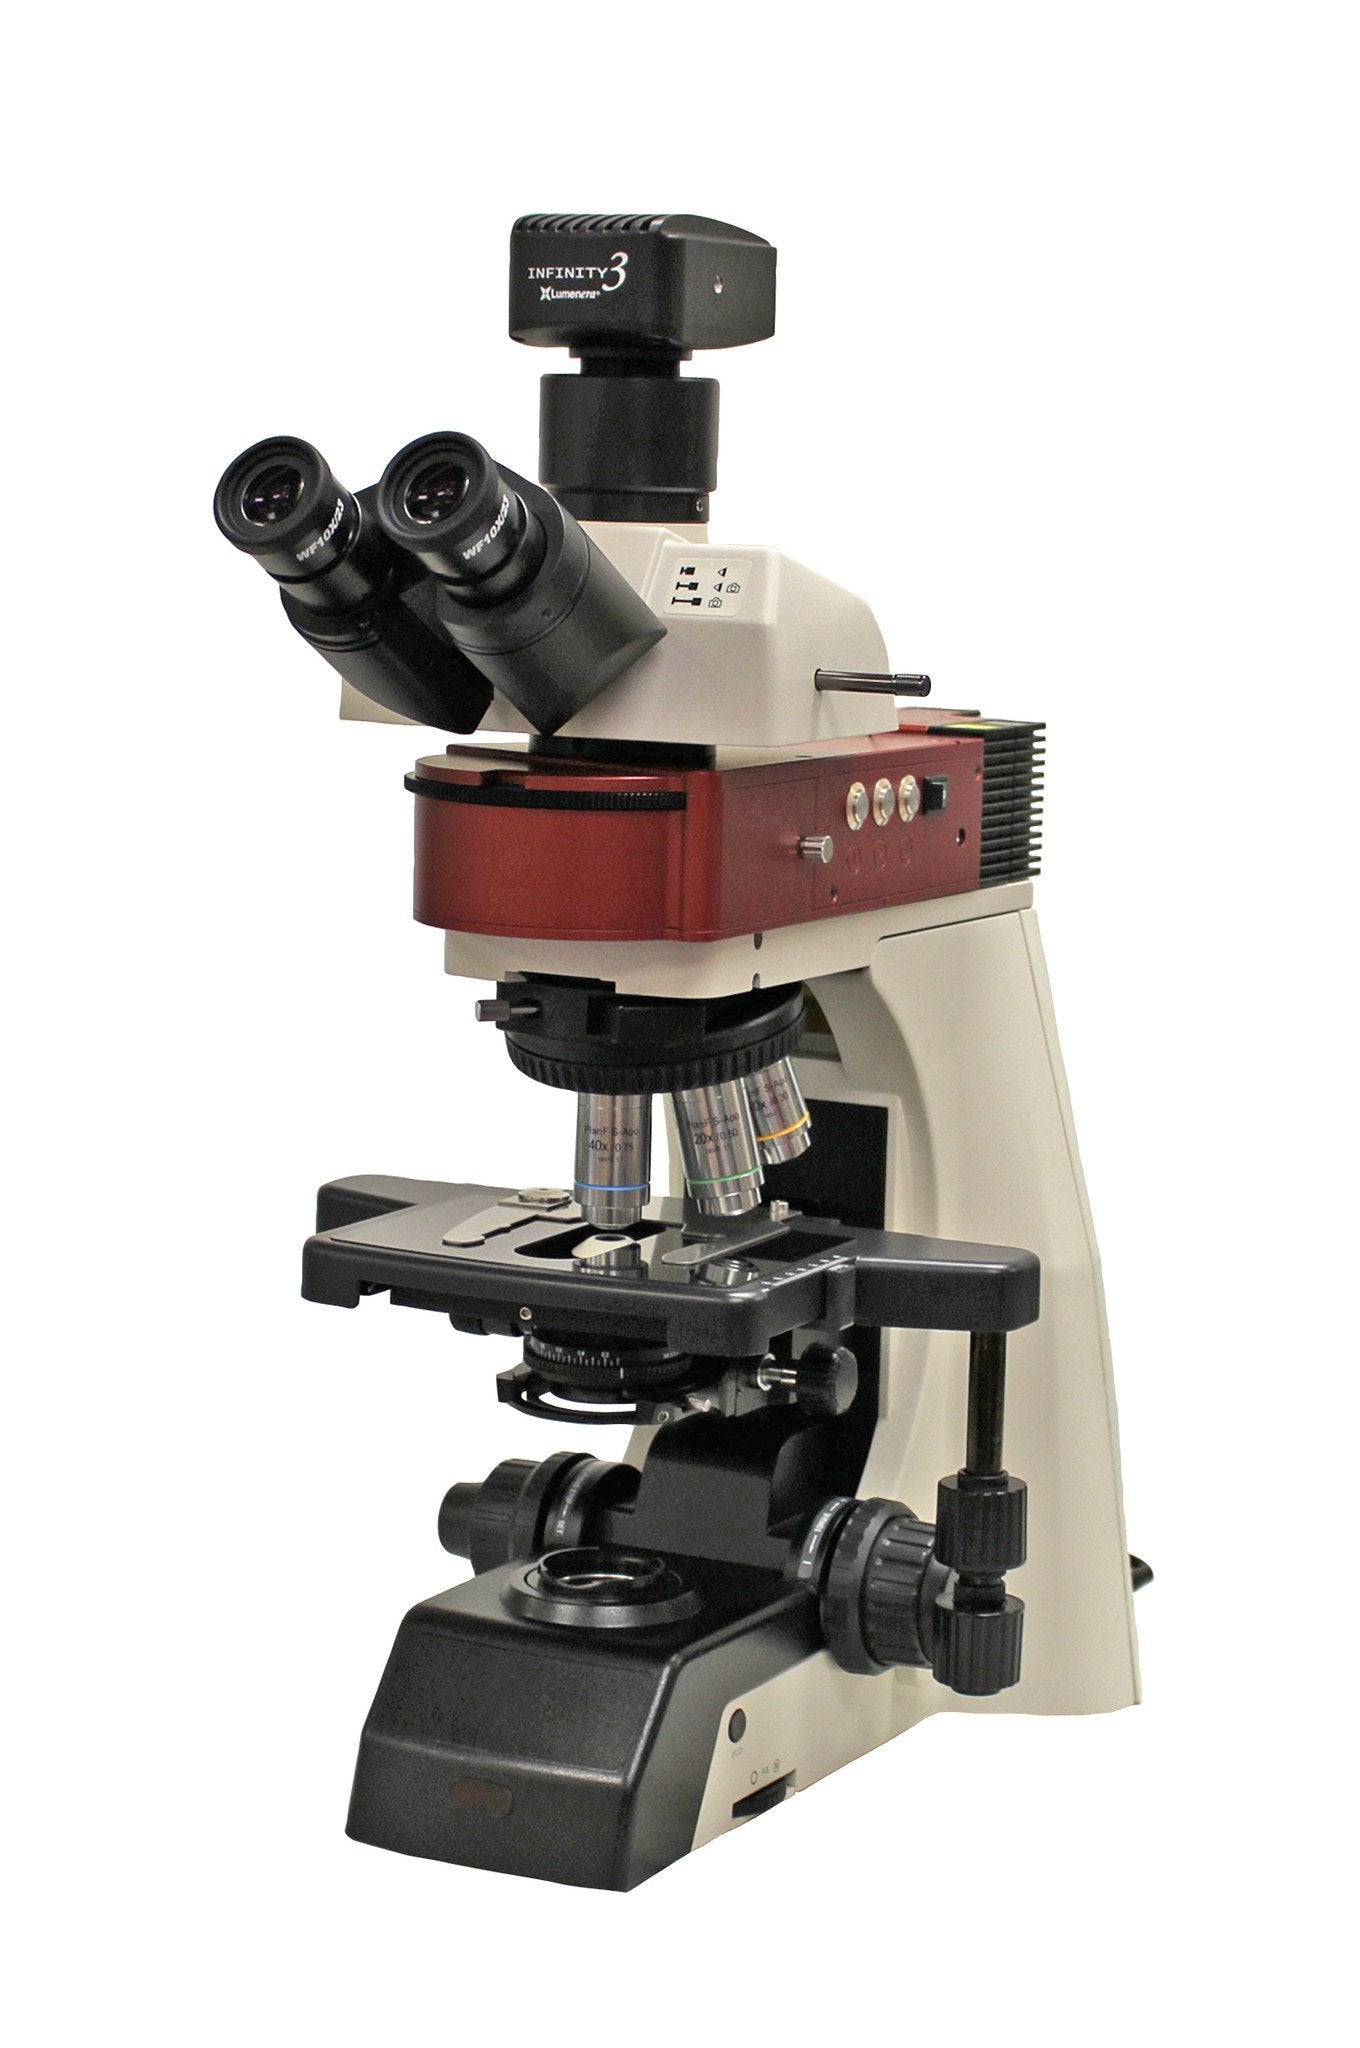 Accu-Scope EXC-500 Clinical Microscope - Microscope Central
 - 2